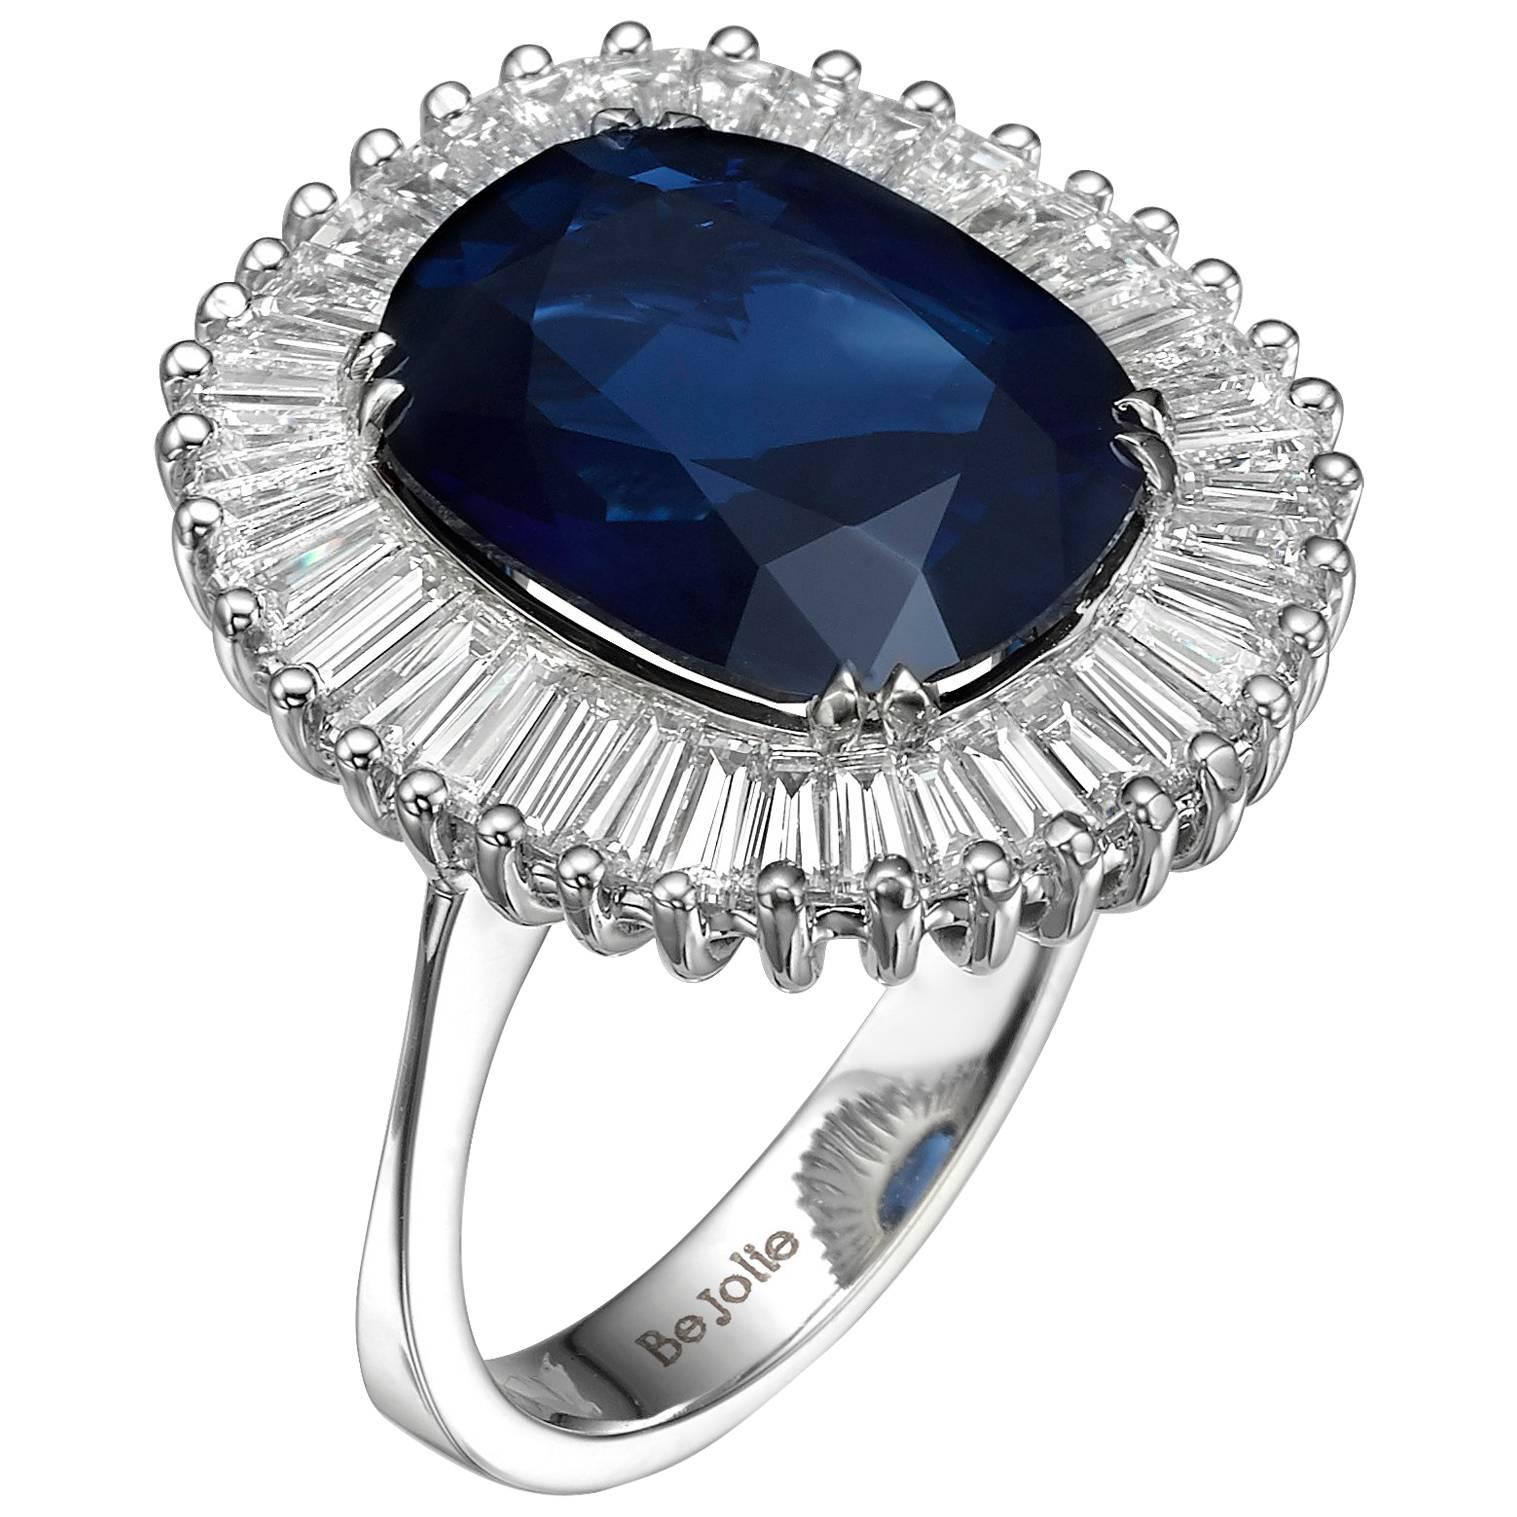 Ballerina Style 6.97 Carat Cushion Cut Blue Sapphire & Diamonds engagement ring